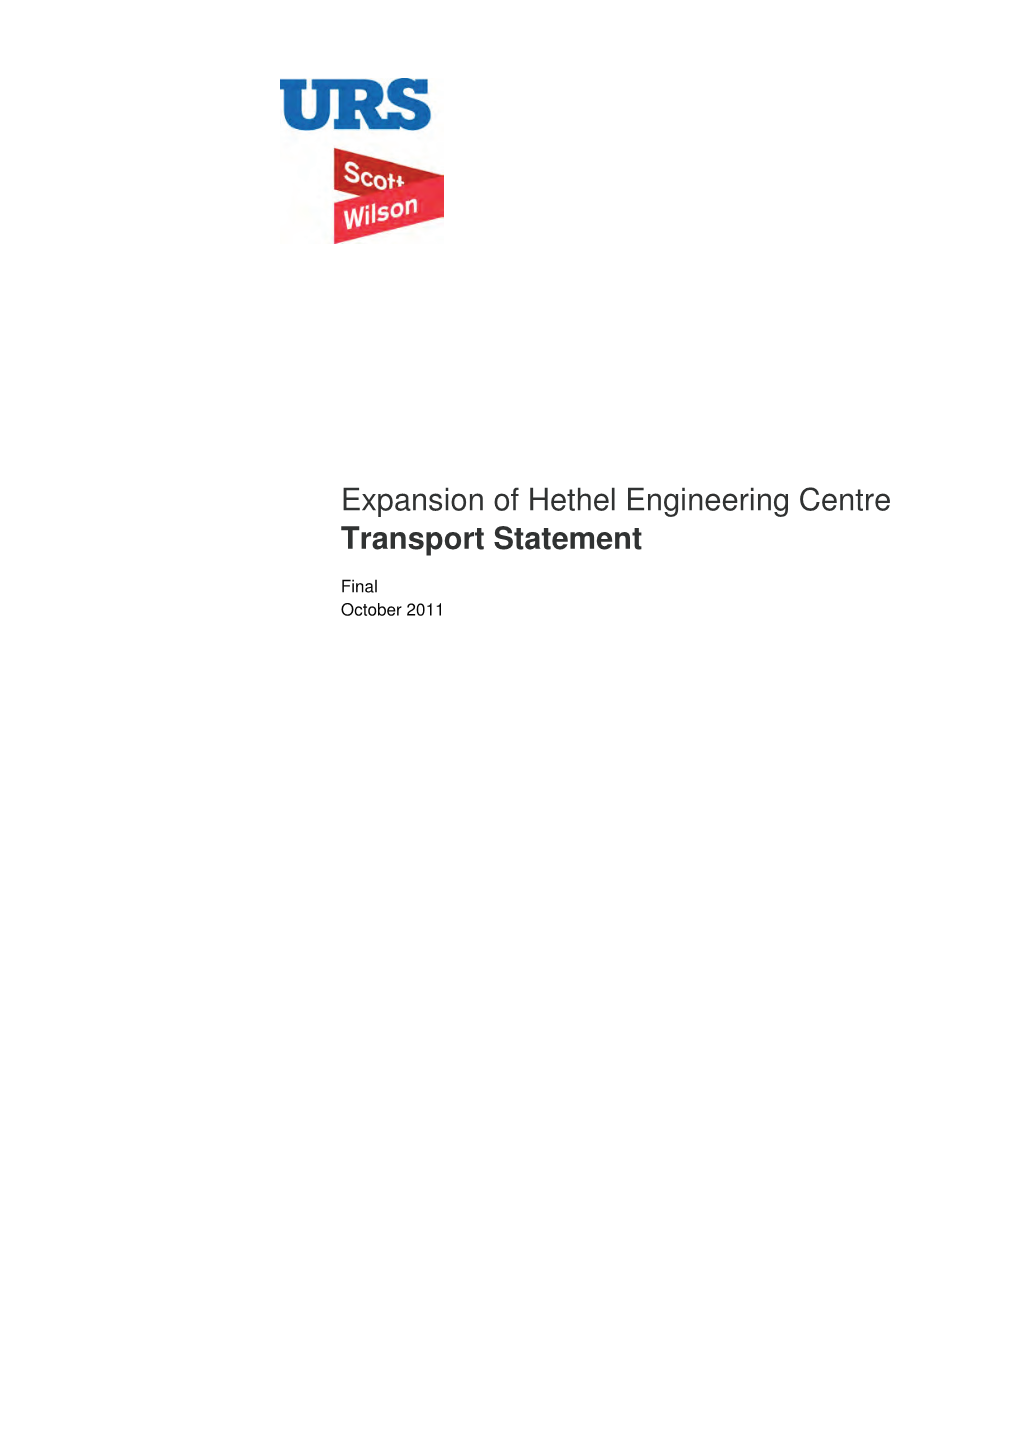 Expansion of Hethel Engineering Centre Transport Statement